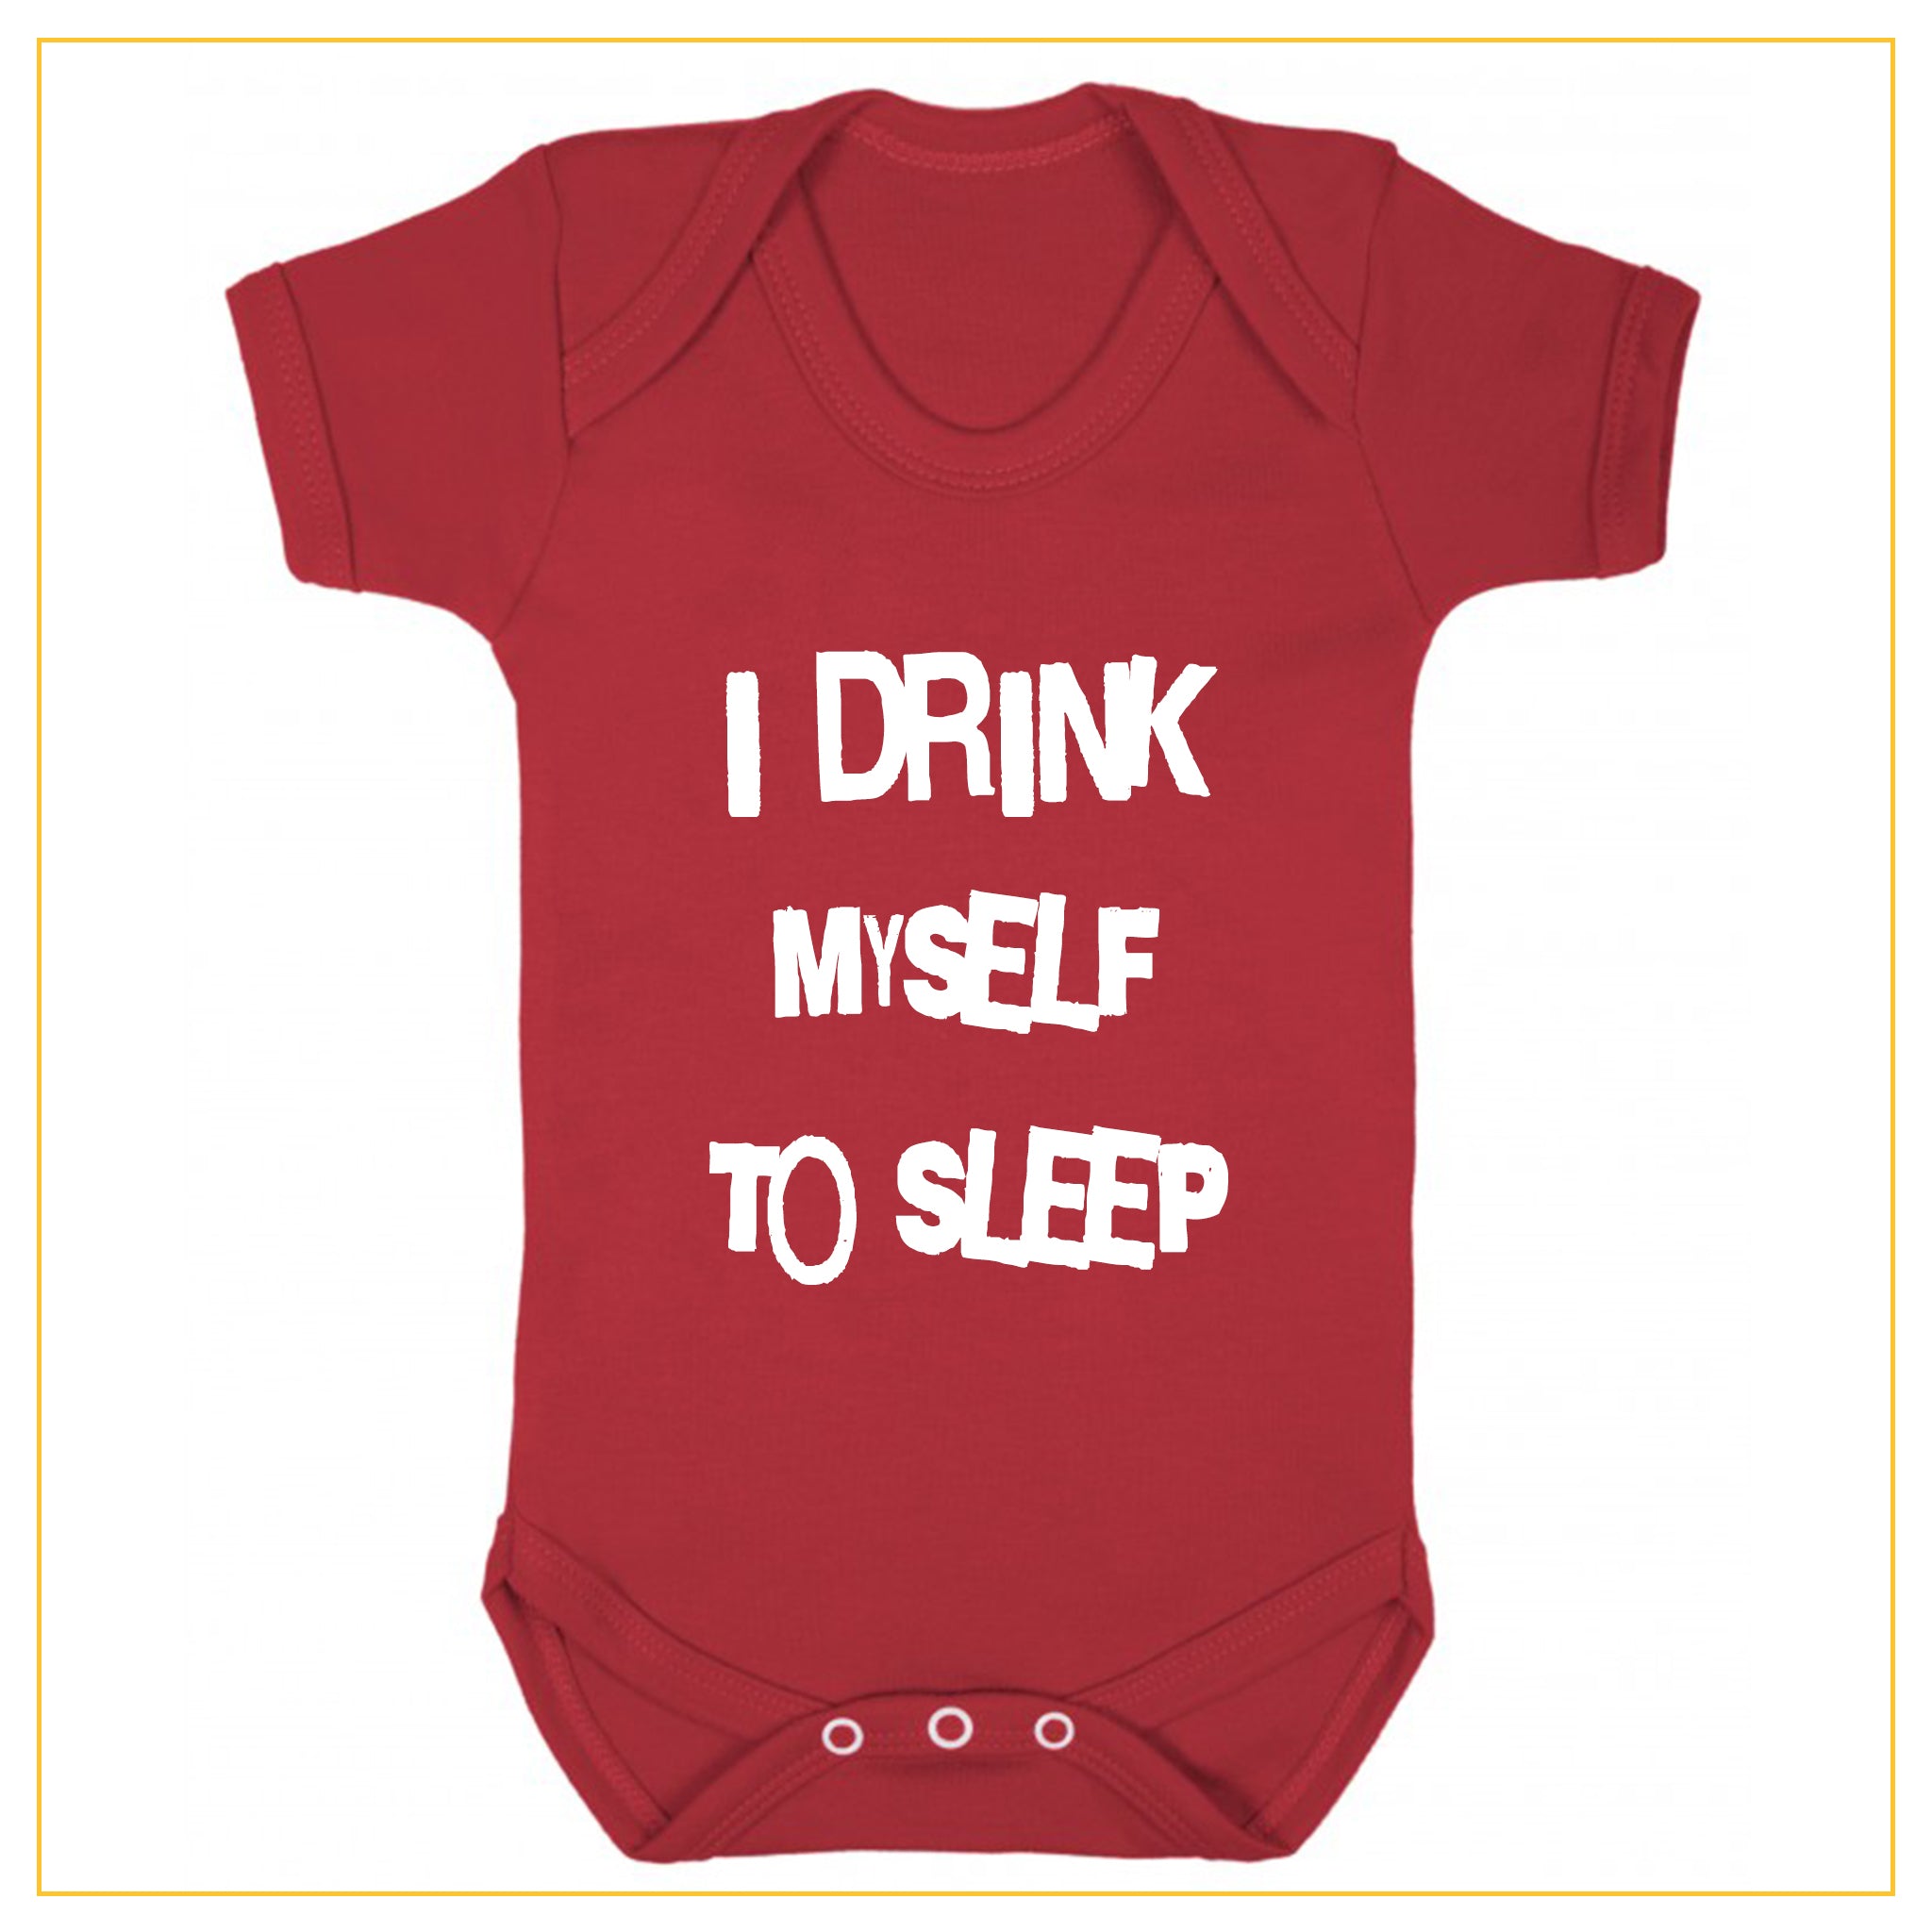 I drink myself to sleep baby onesie in red